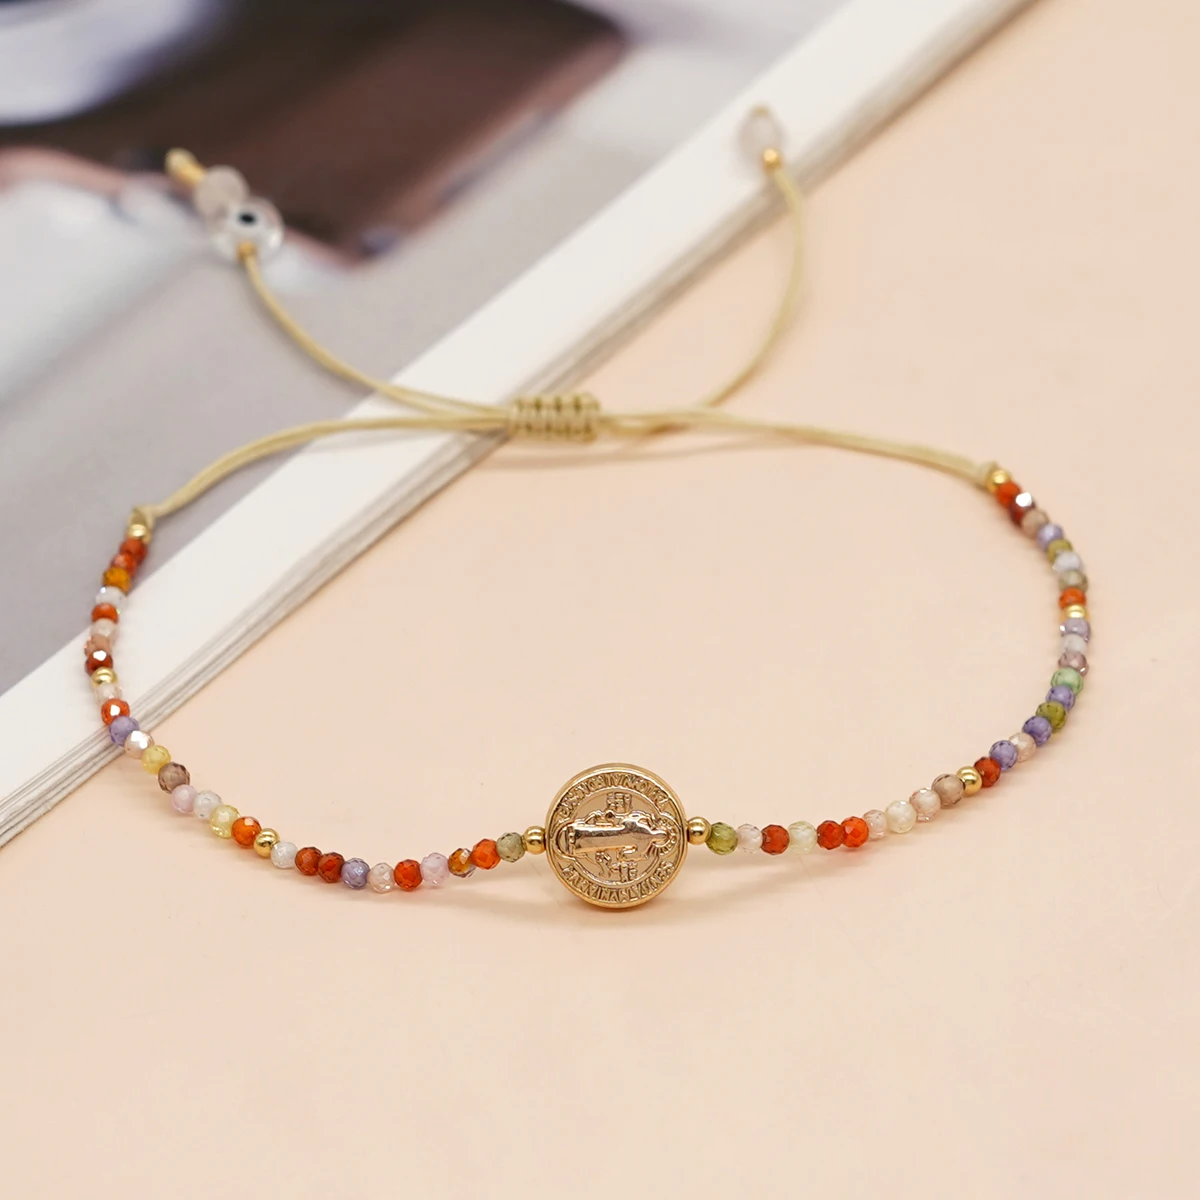 

Go2boho New In Friendship Bracelets For Women Boho Summer Fashion Jewelry Mixed Natrual Stone Crystal Bead Handmade Gift